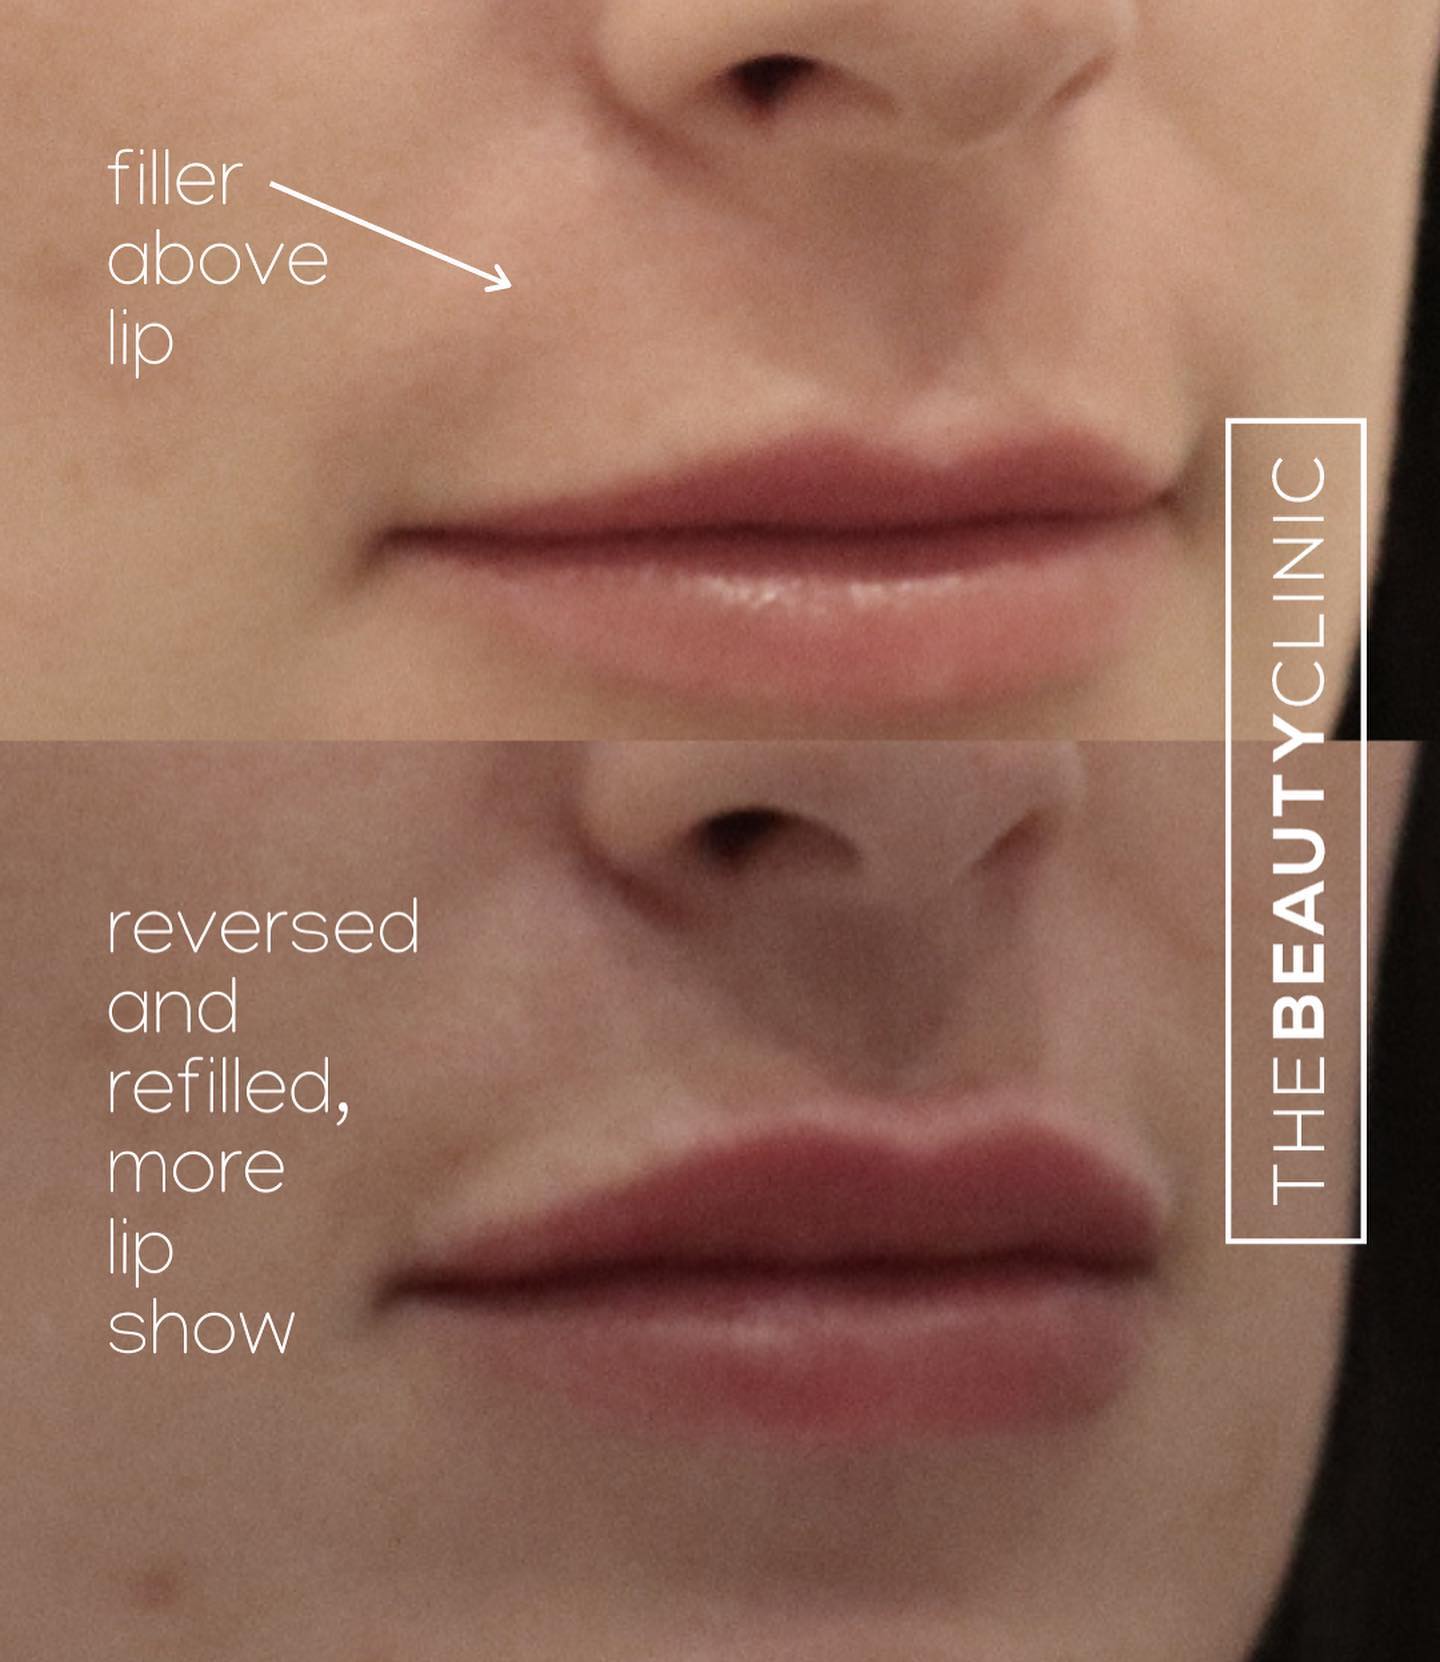 The Beauty Clinic Lip Filler